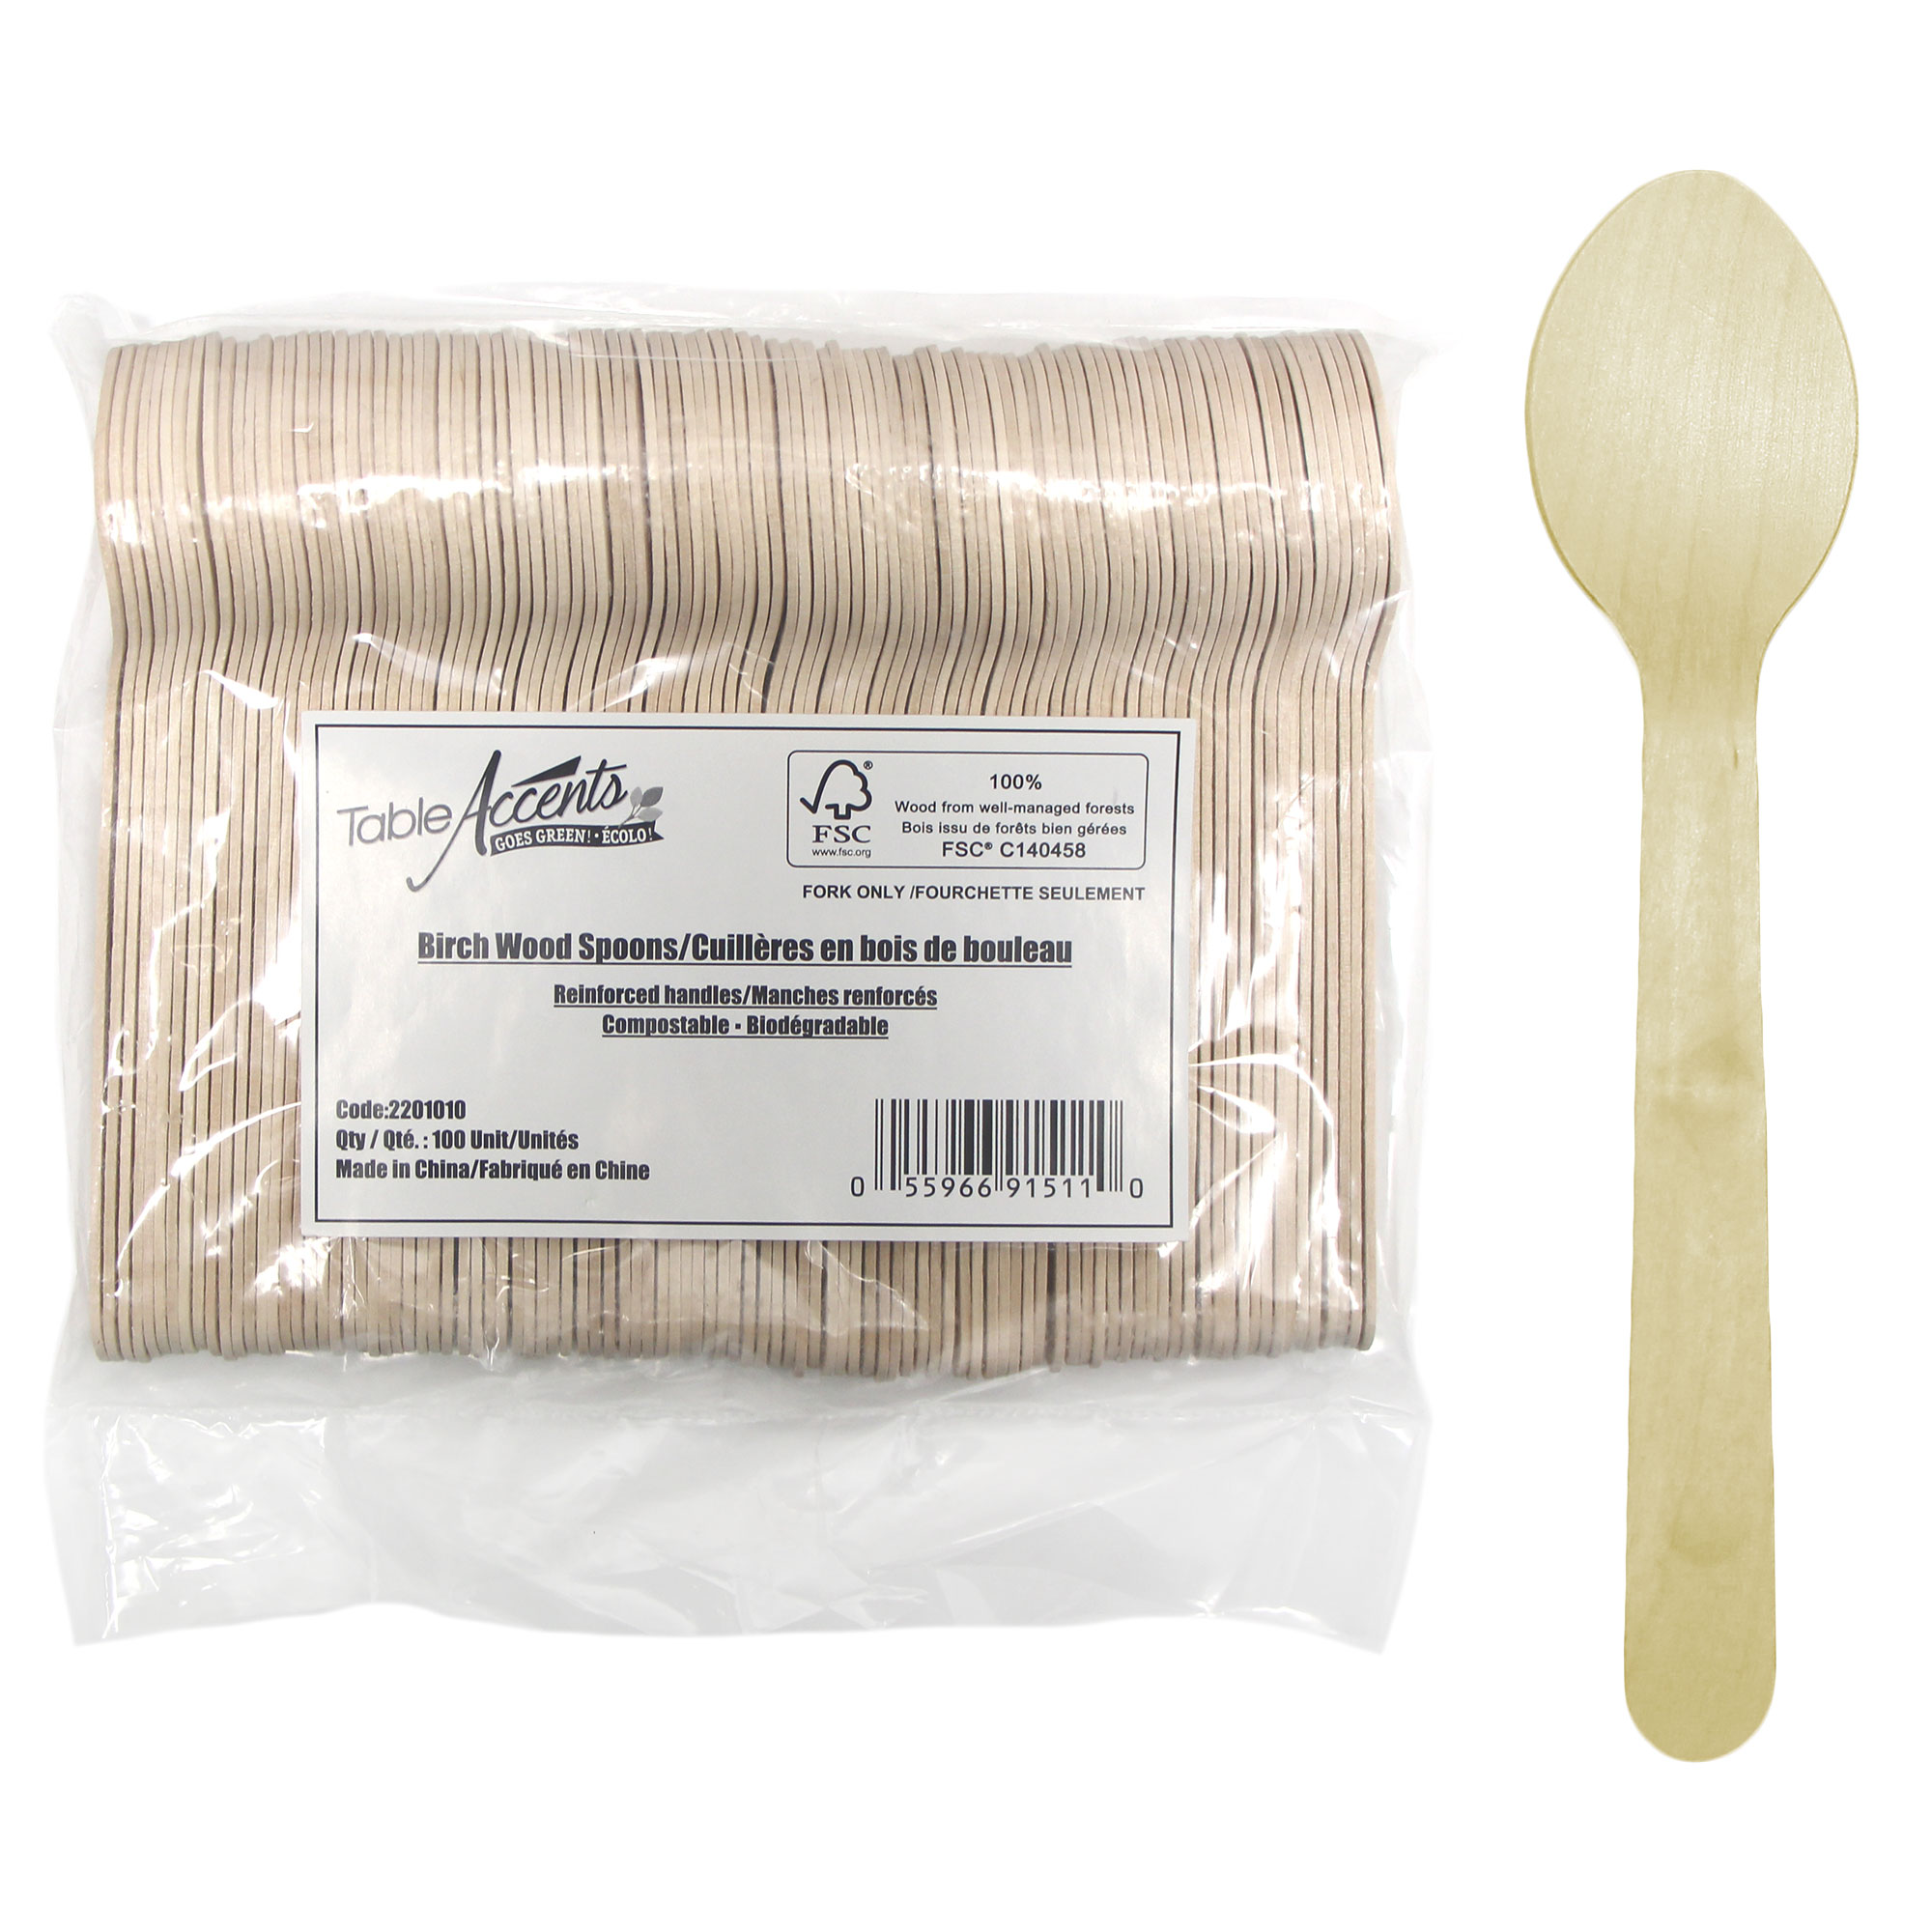 birch wood spoons 10 bags /100